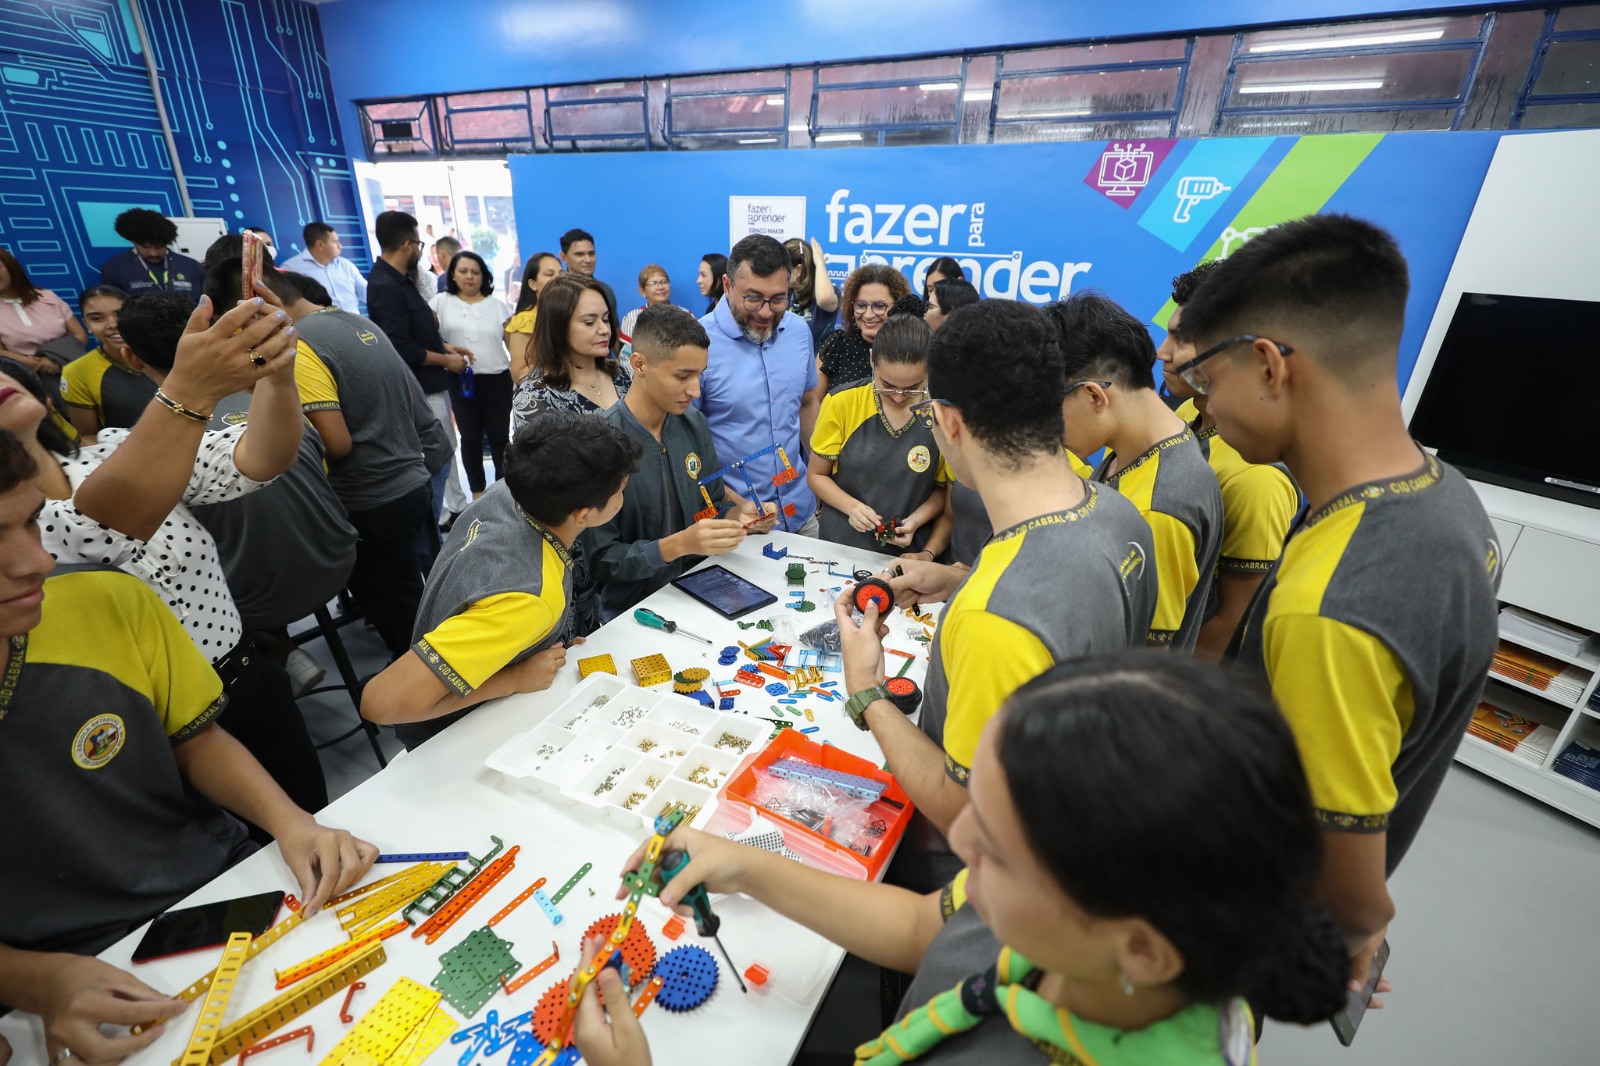 Wilson Lima entrega escola revitalizada no bairro Cidade Nova